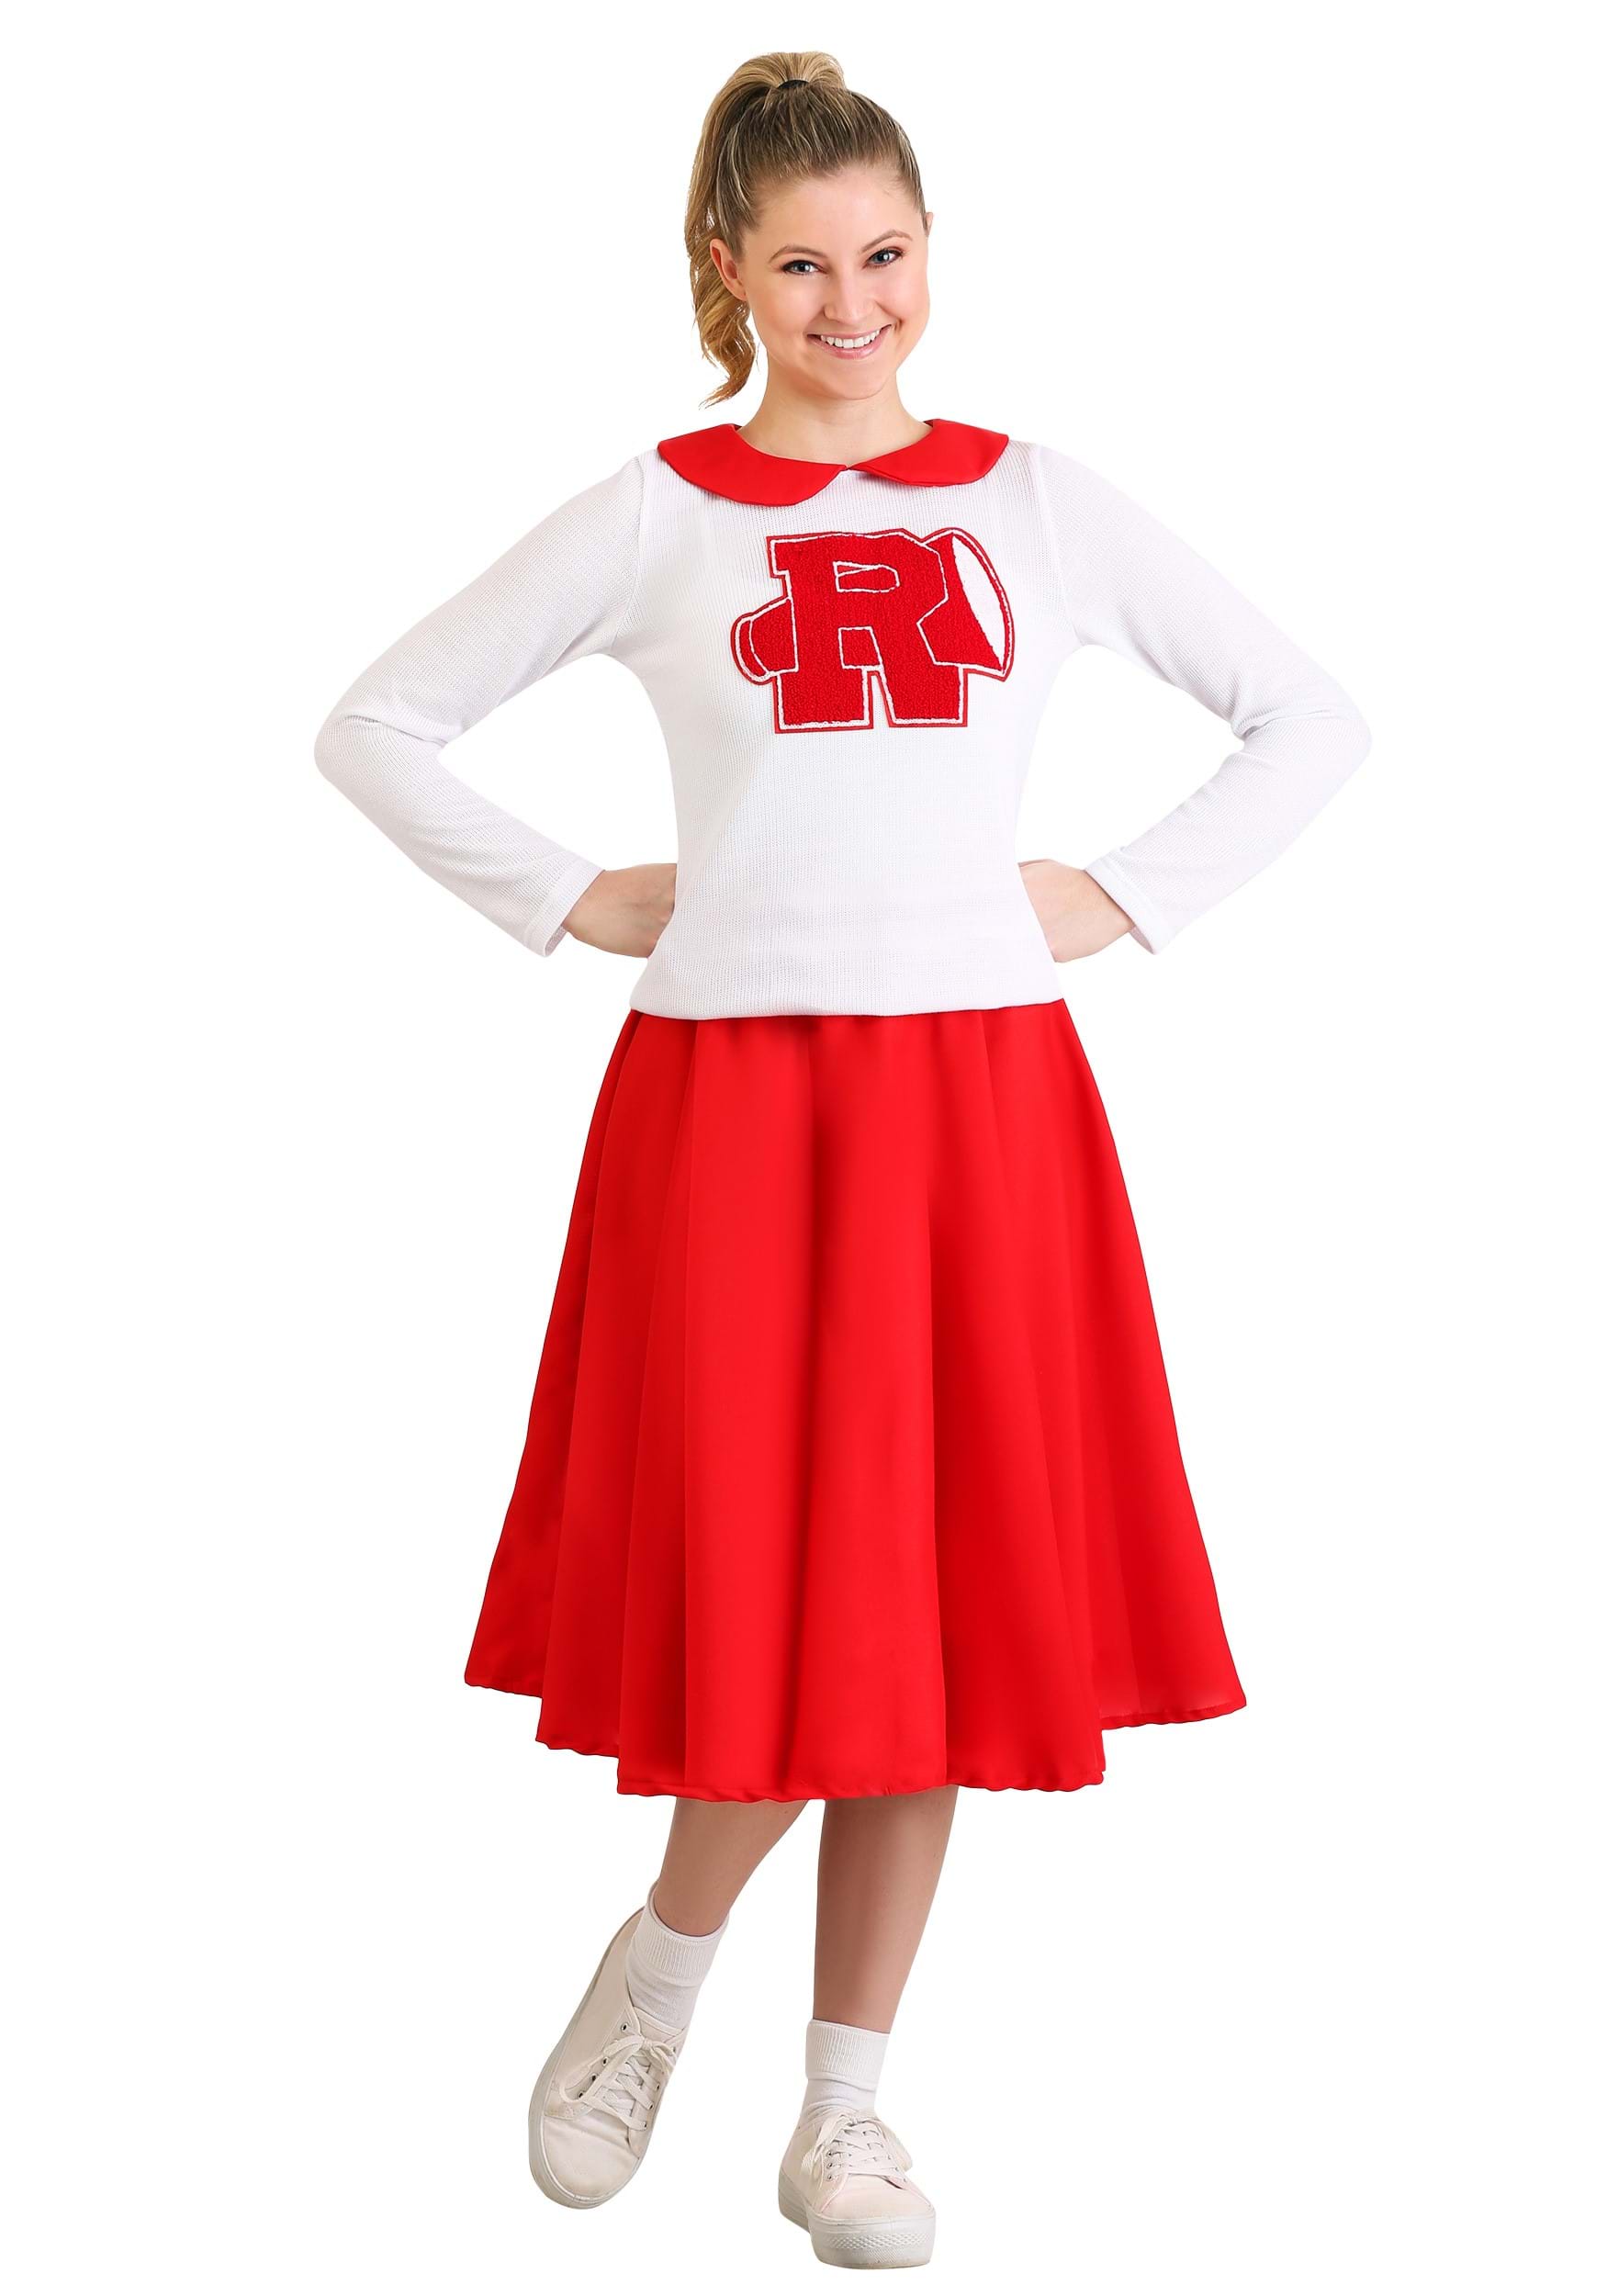 Grease Rydell High Cheerleader Women's Costume